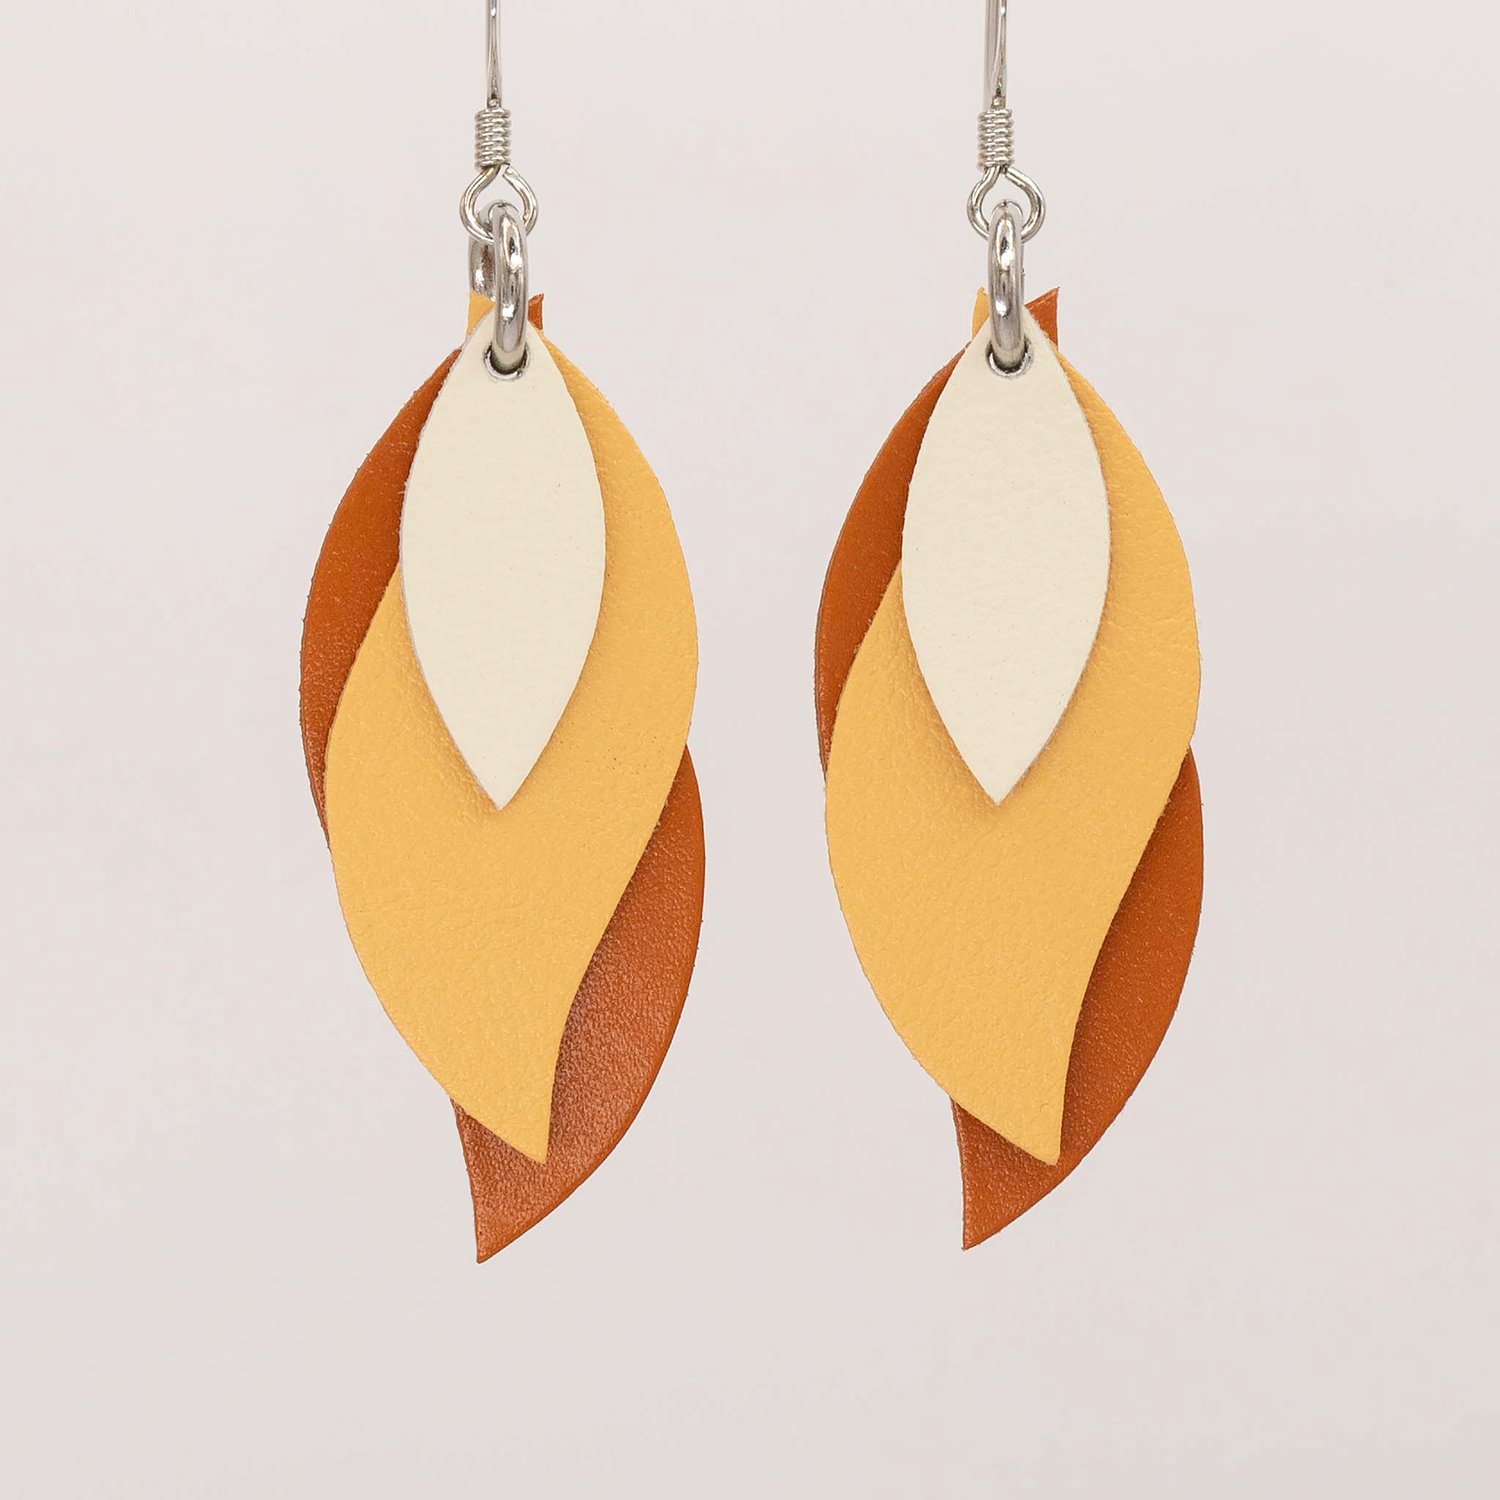 Image of Handmade Australian leather leaf earrings - Cream, soft apricot, warm orange [LAO-116]